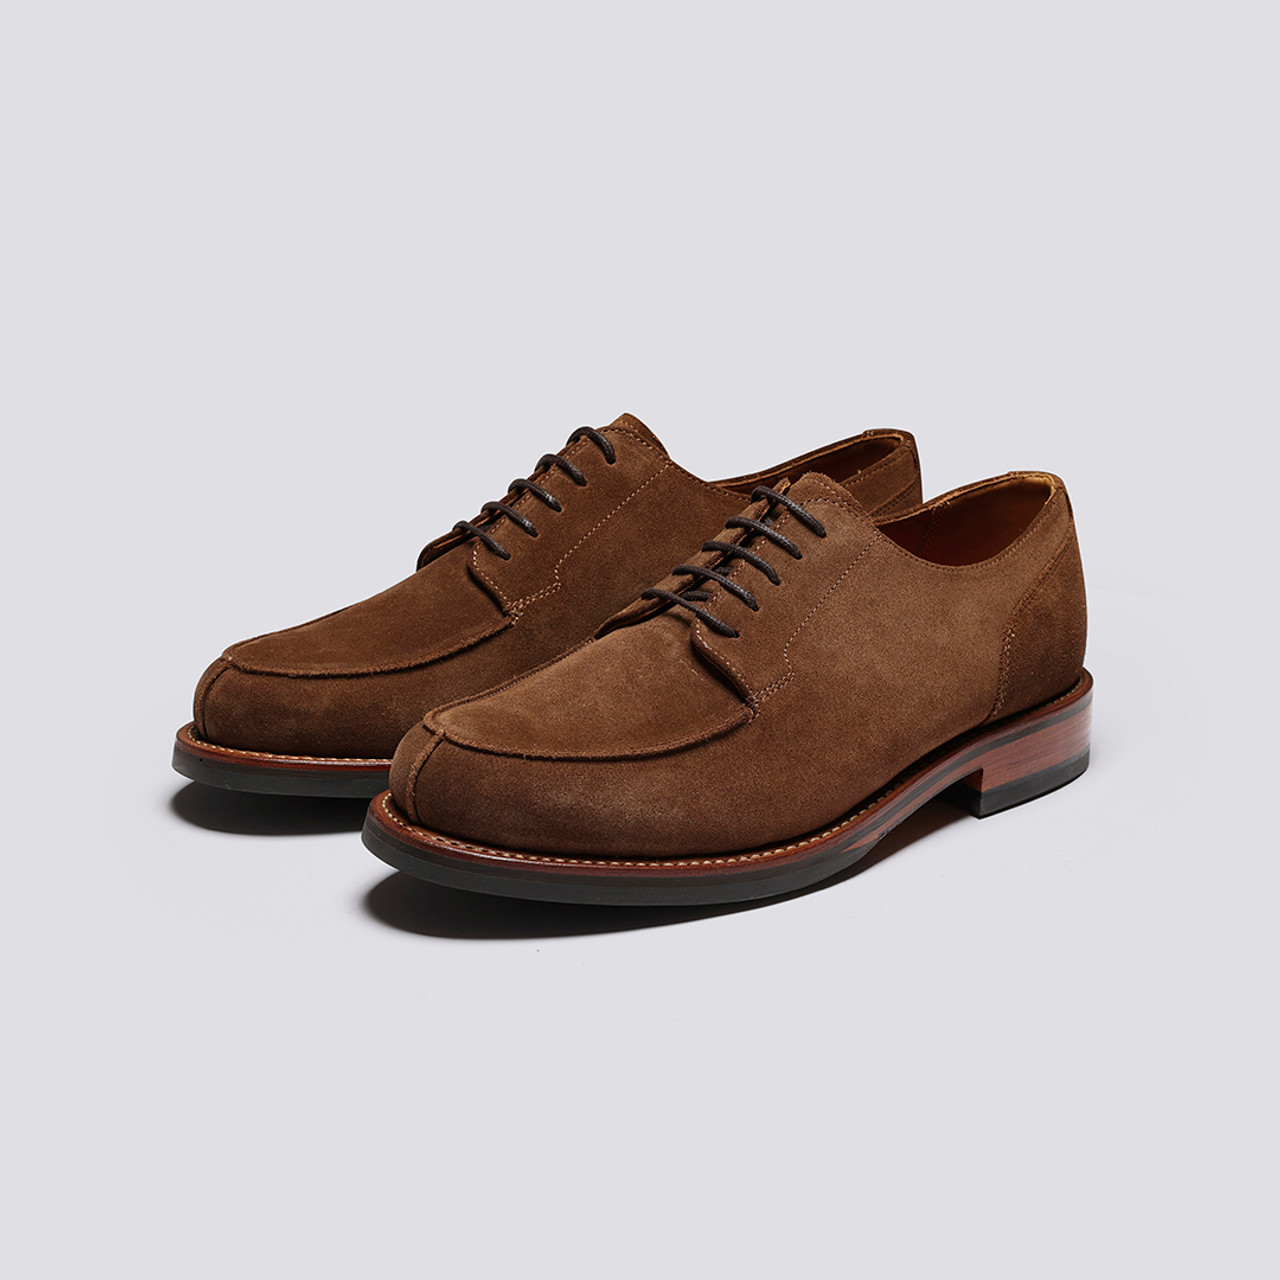 Mac | Mens Derby Shoes in Brown Toffee Suede | Grenson